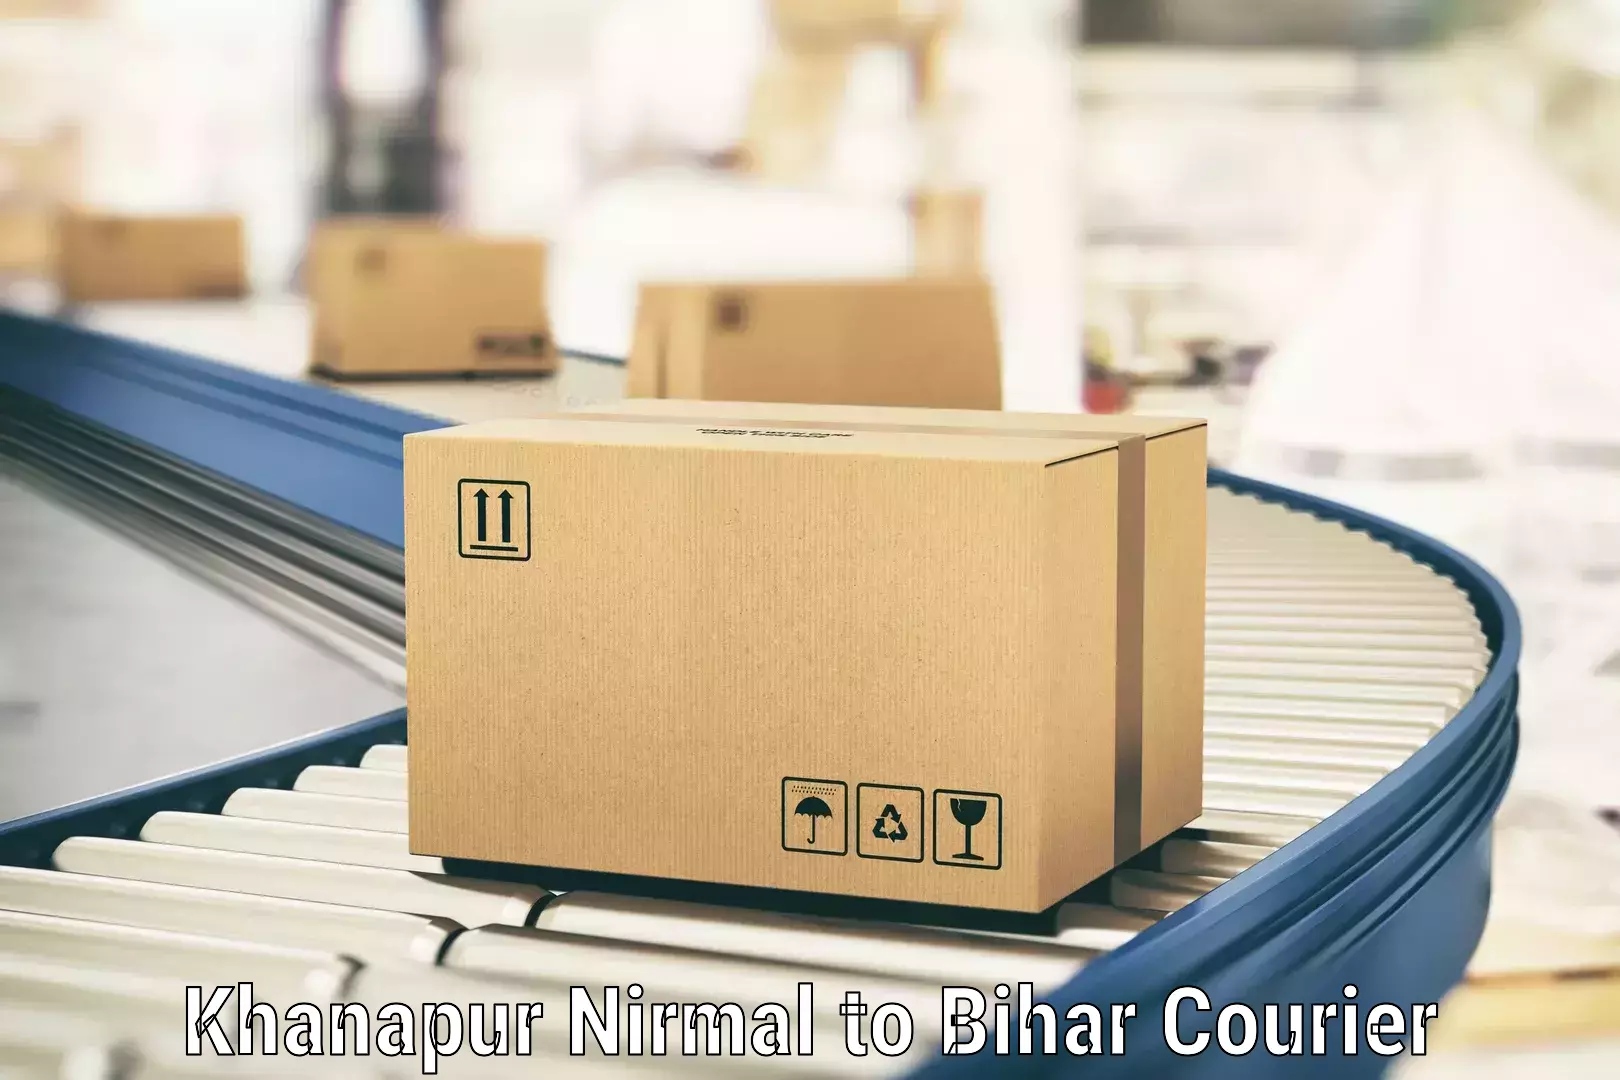 State-of-the-art courier technology Khanapur Nirmal to Bakhri